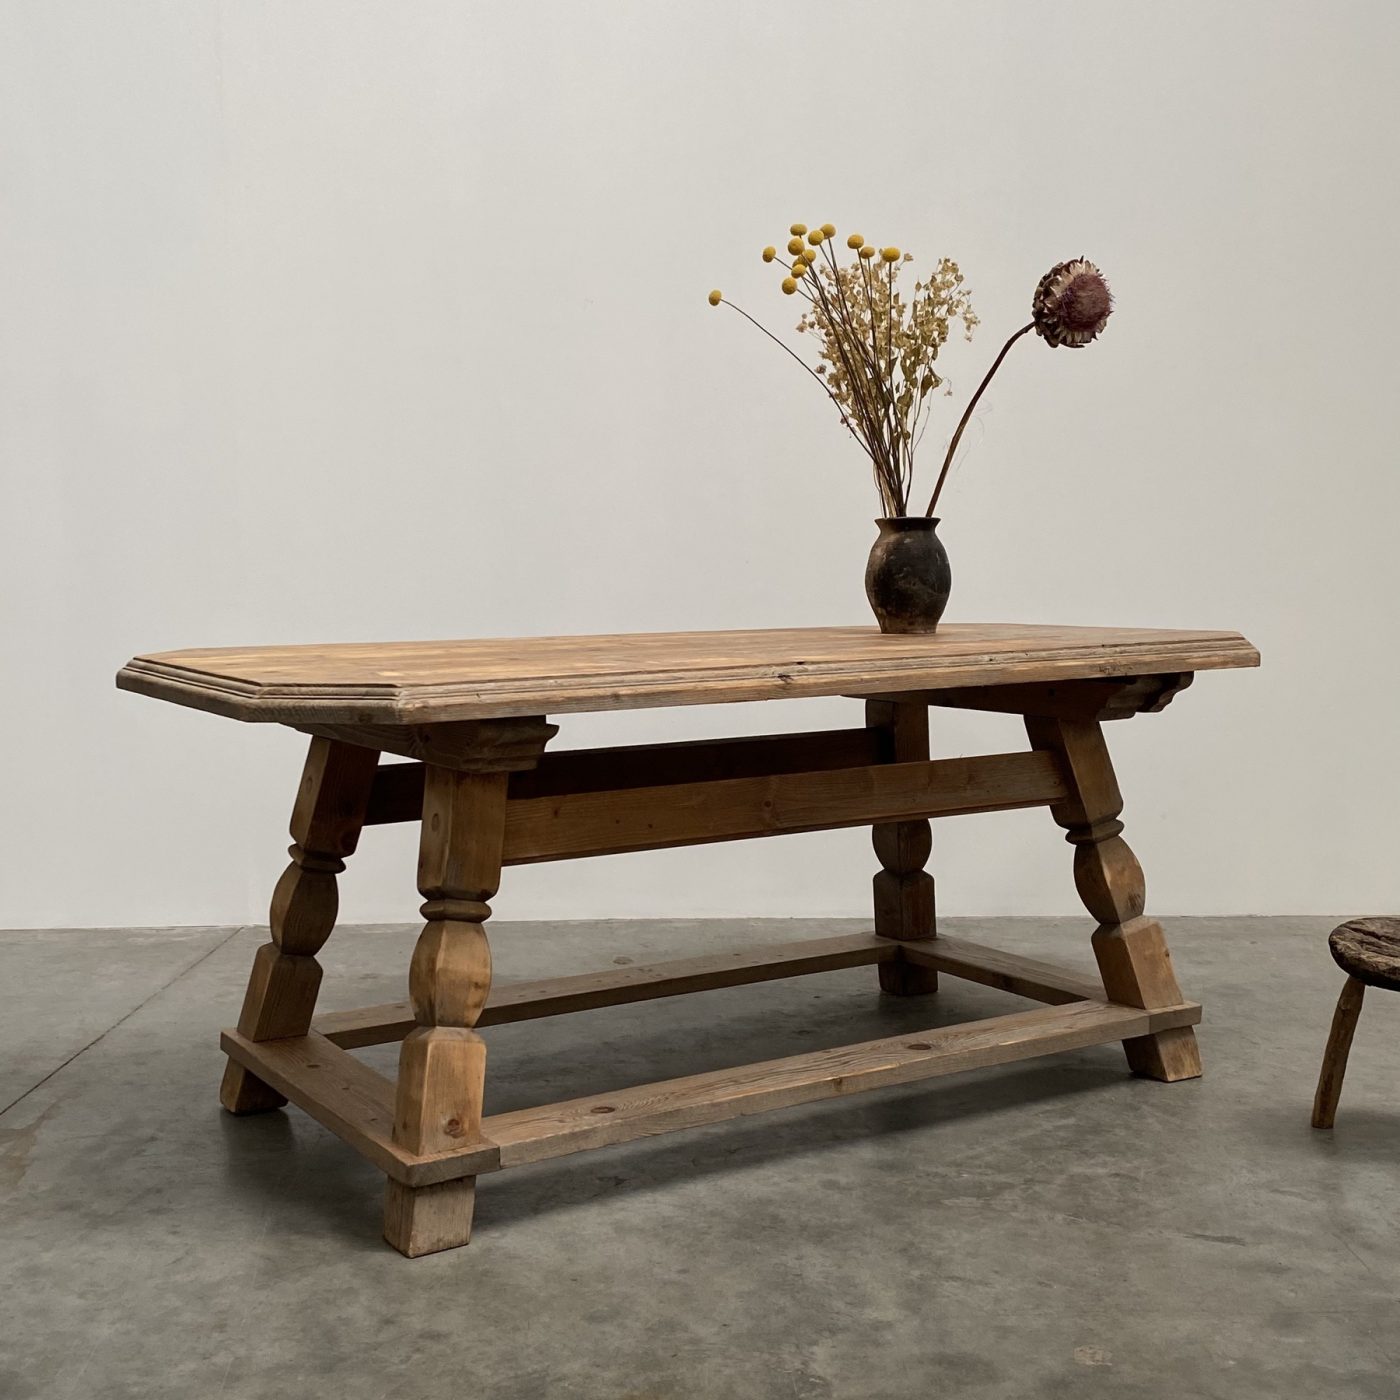 objet-vagabond-pine-table0007